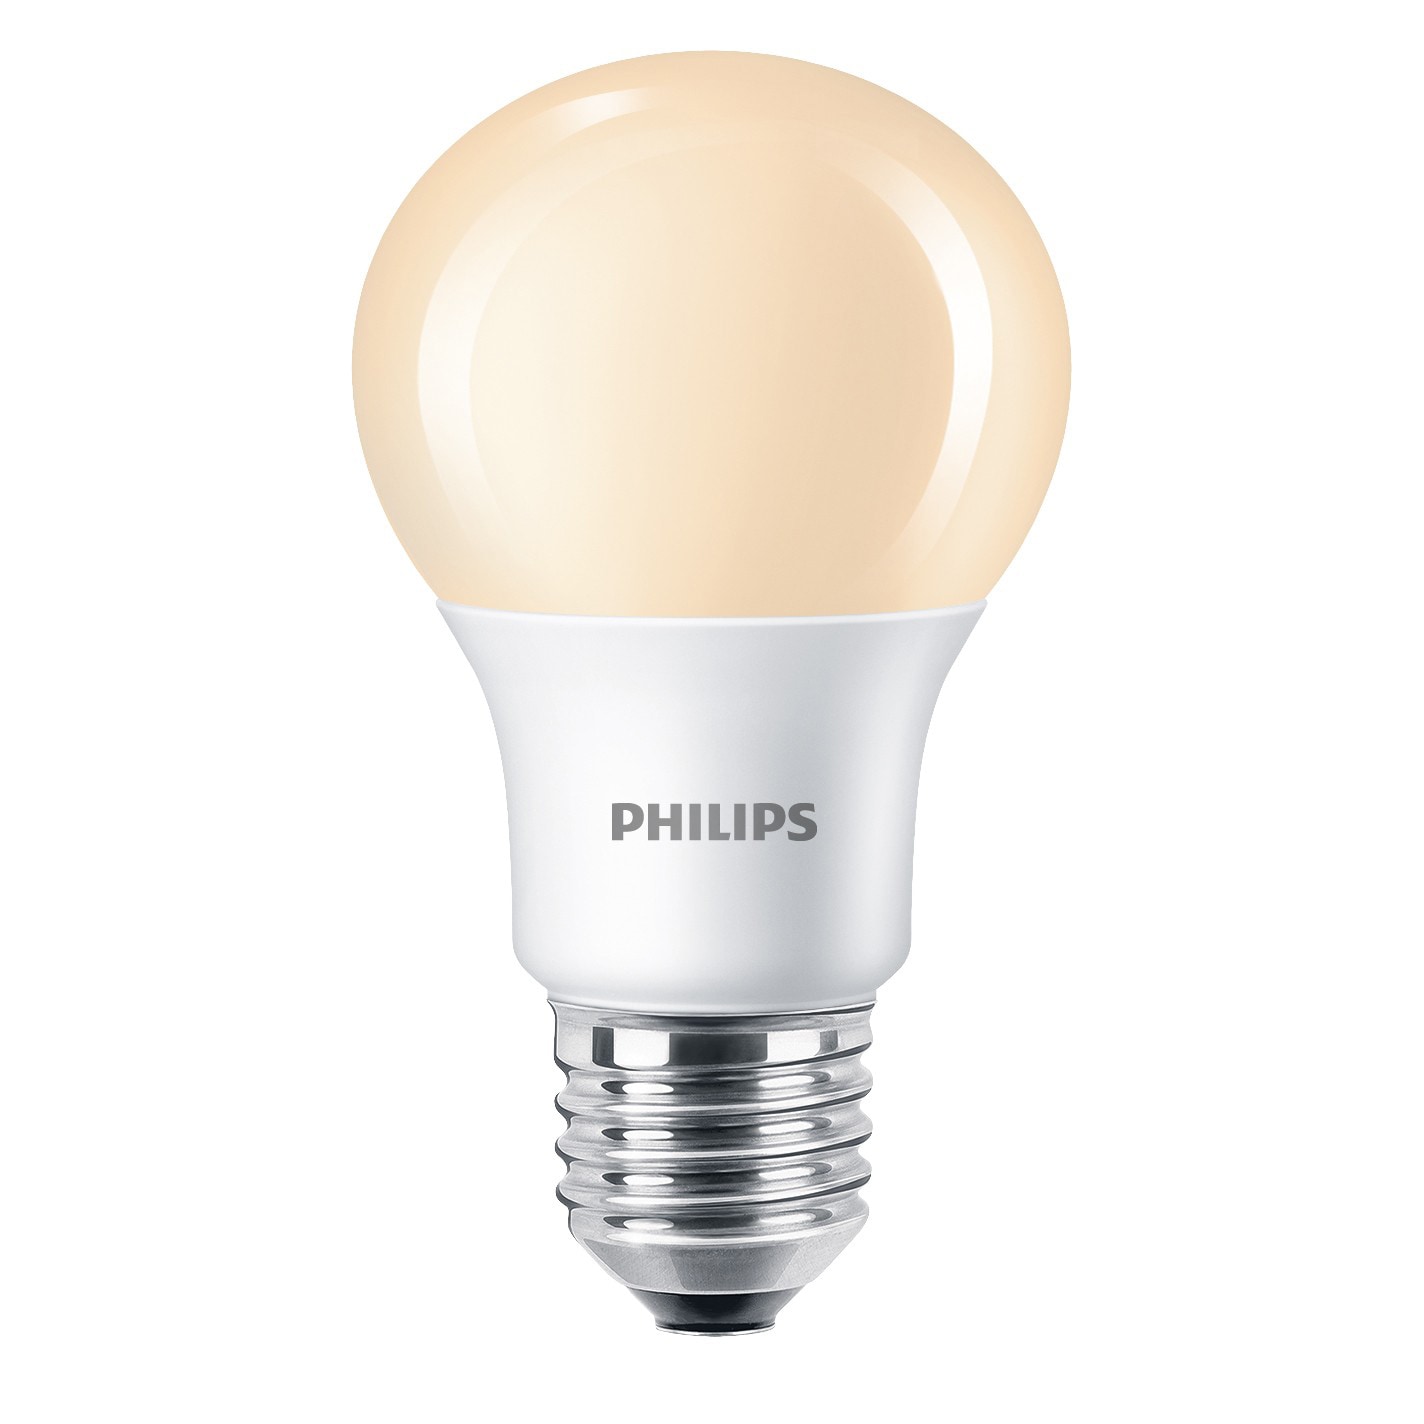 Philips LED Flame lampa 8718696652275 - Elgiganten